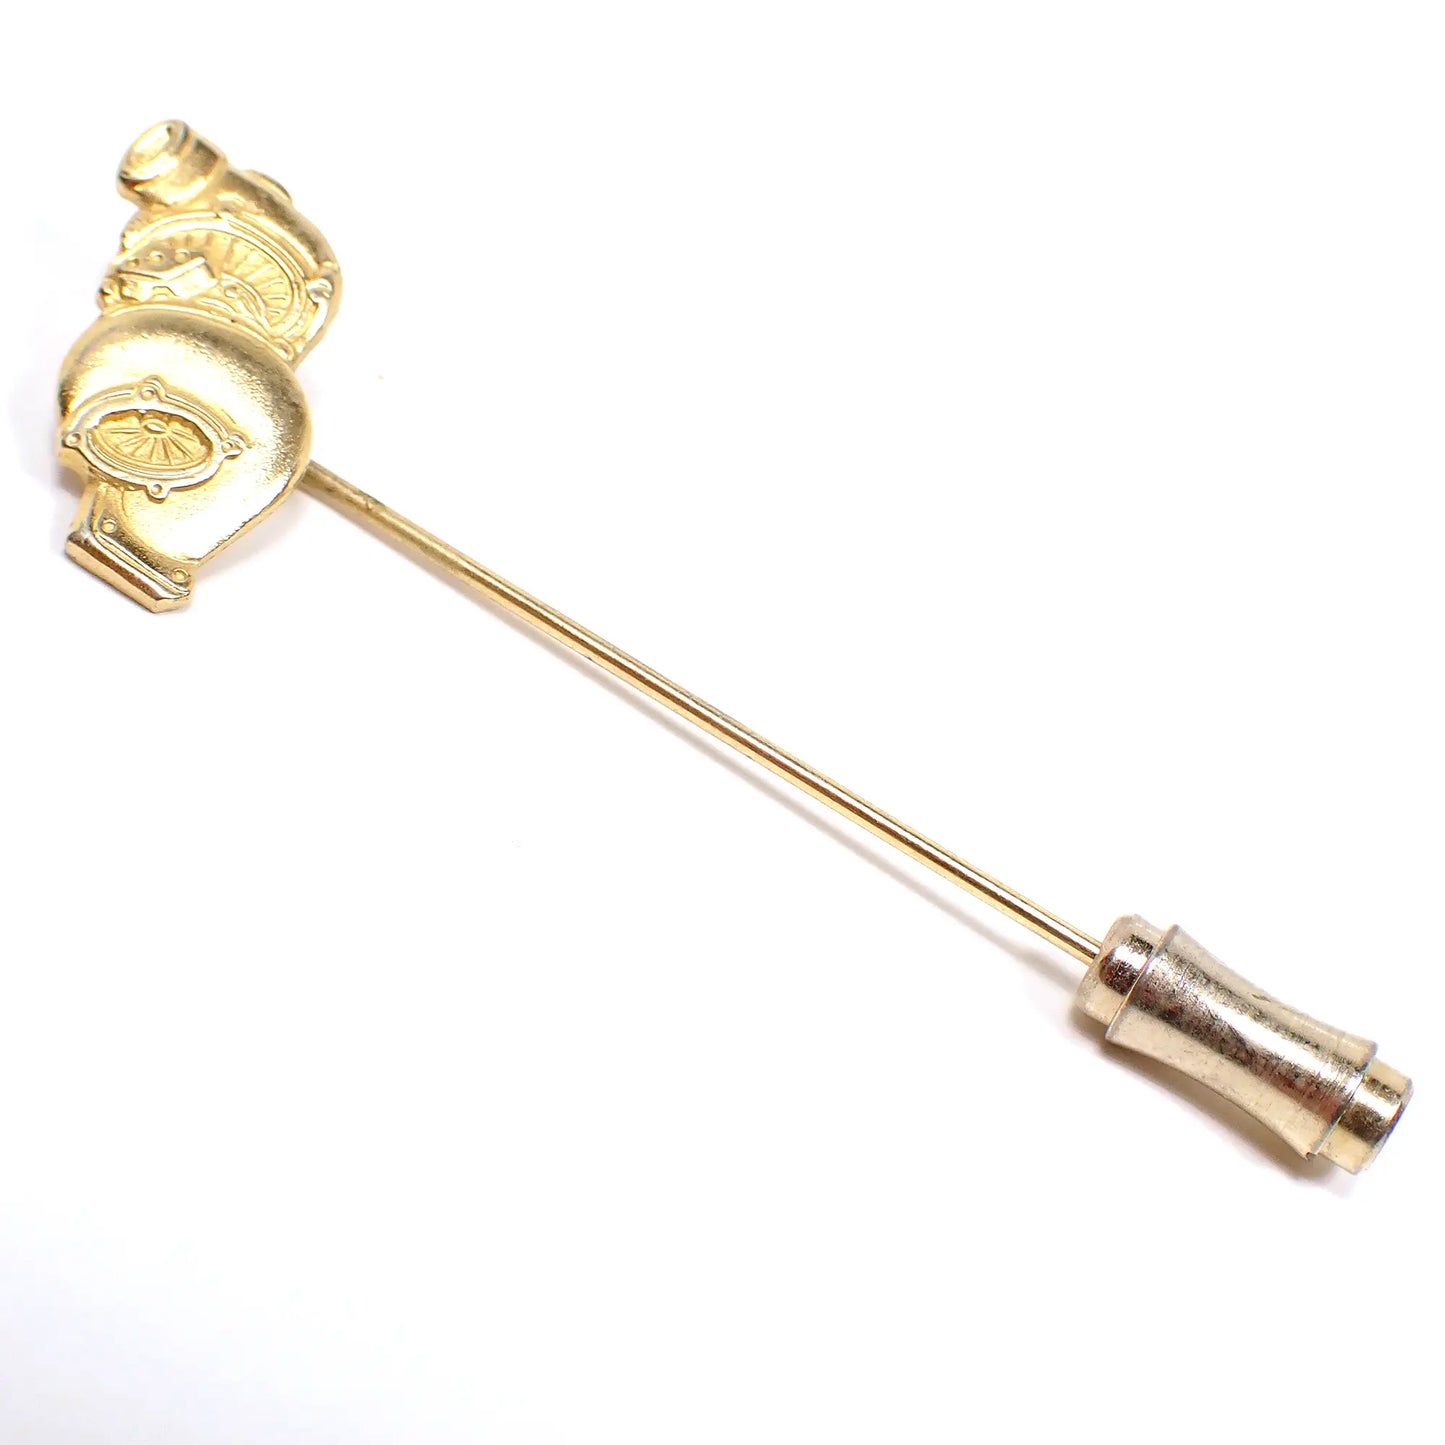 Centrifugal Fan Vintage Stick Pin